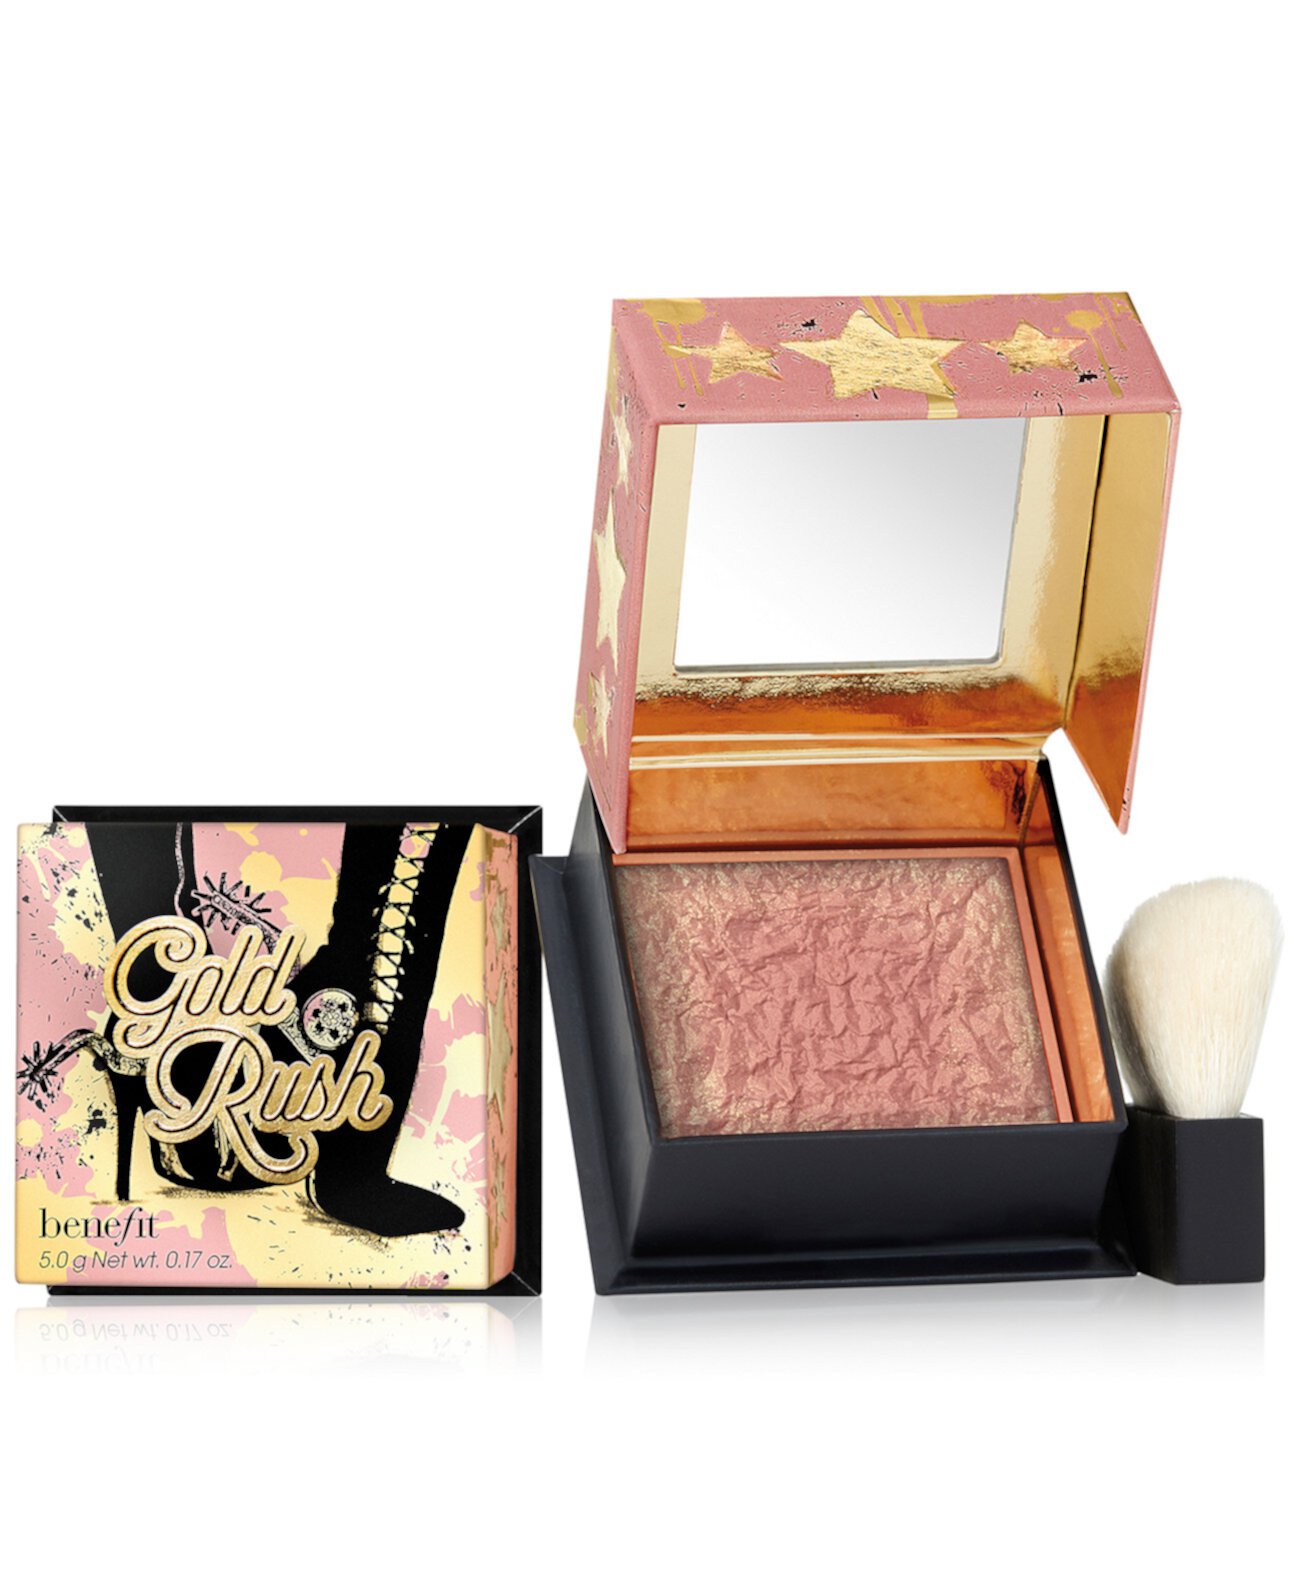 Золотая лихорадка Box O 'Powder Blush Benefit Cosmetics